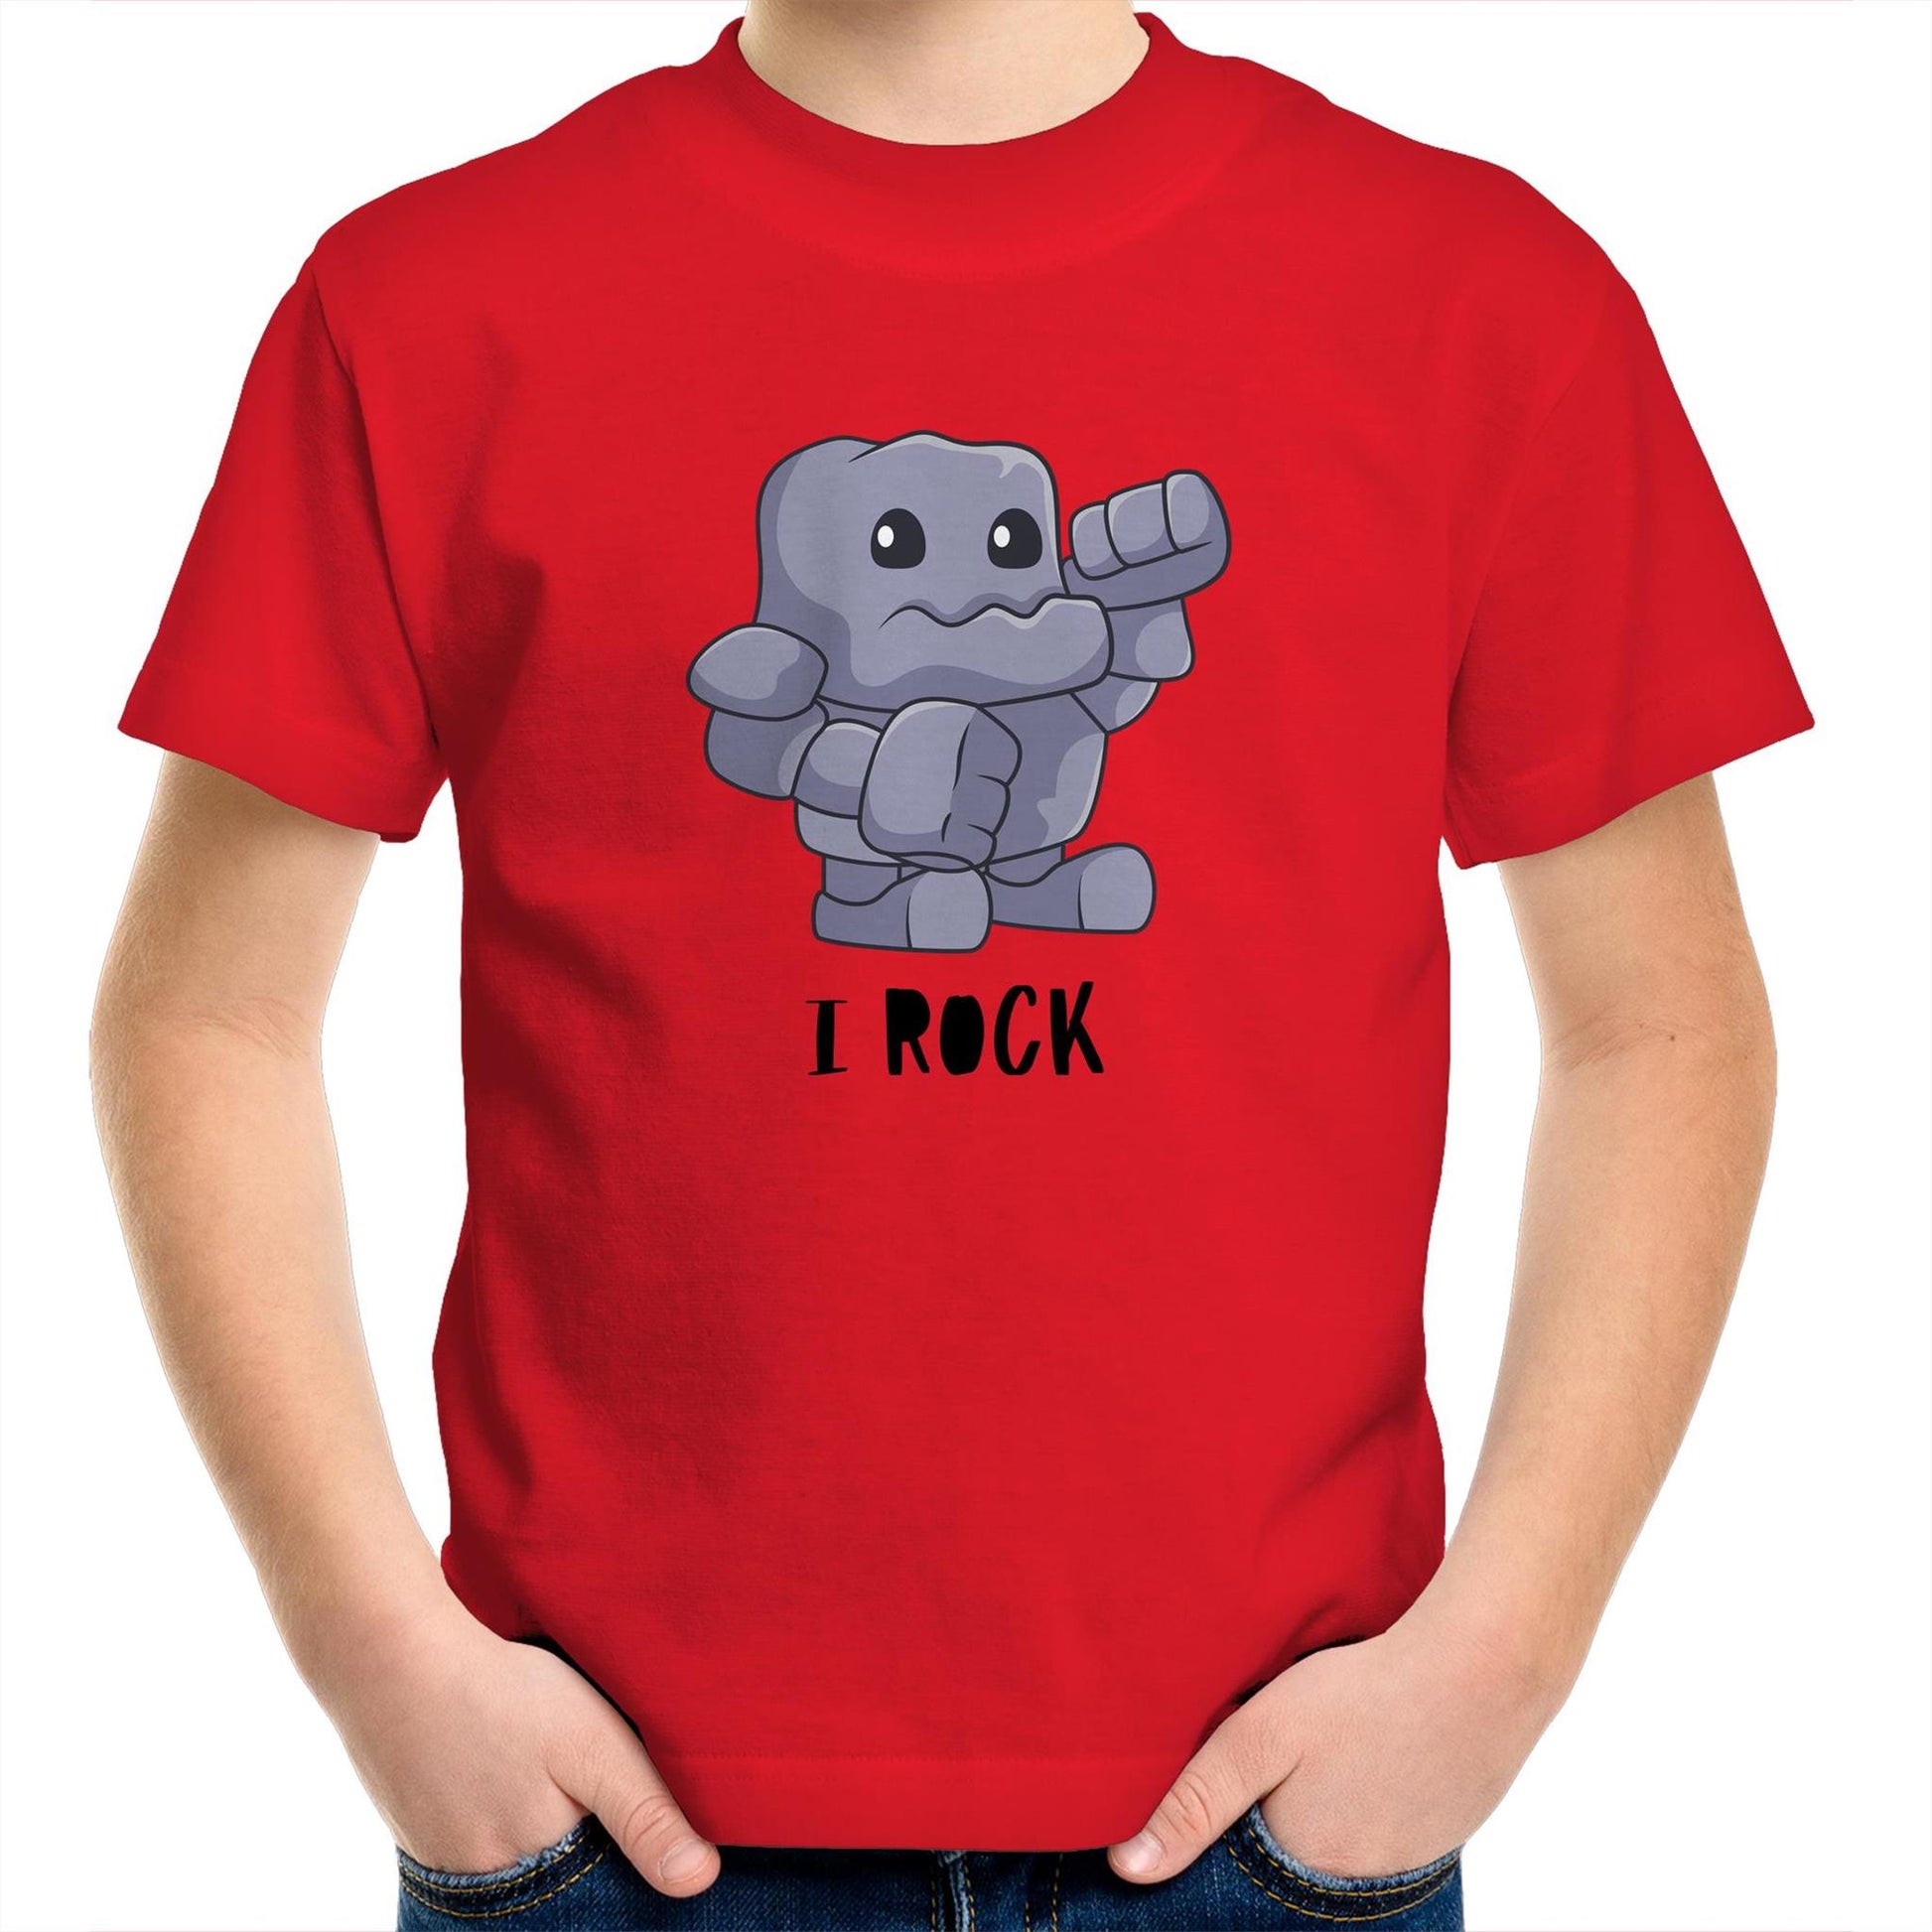 I Rock - Kids Youth T-Shirt Red Kids Youth T-shirt Music